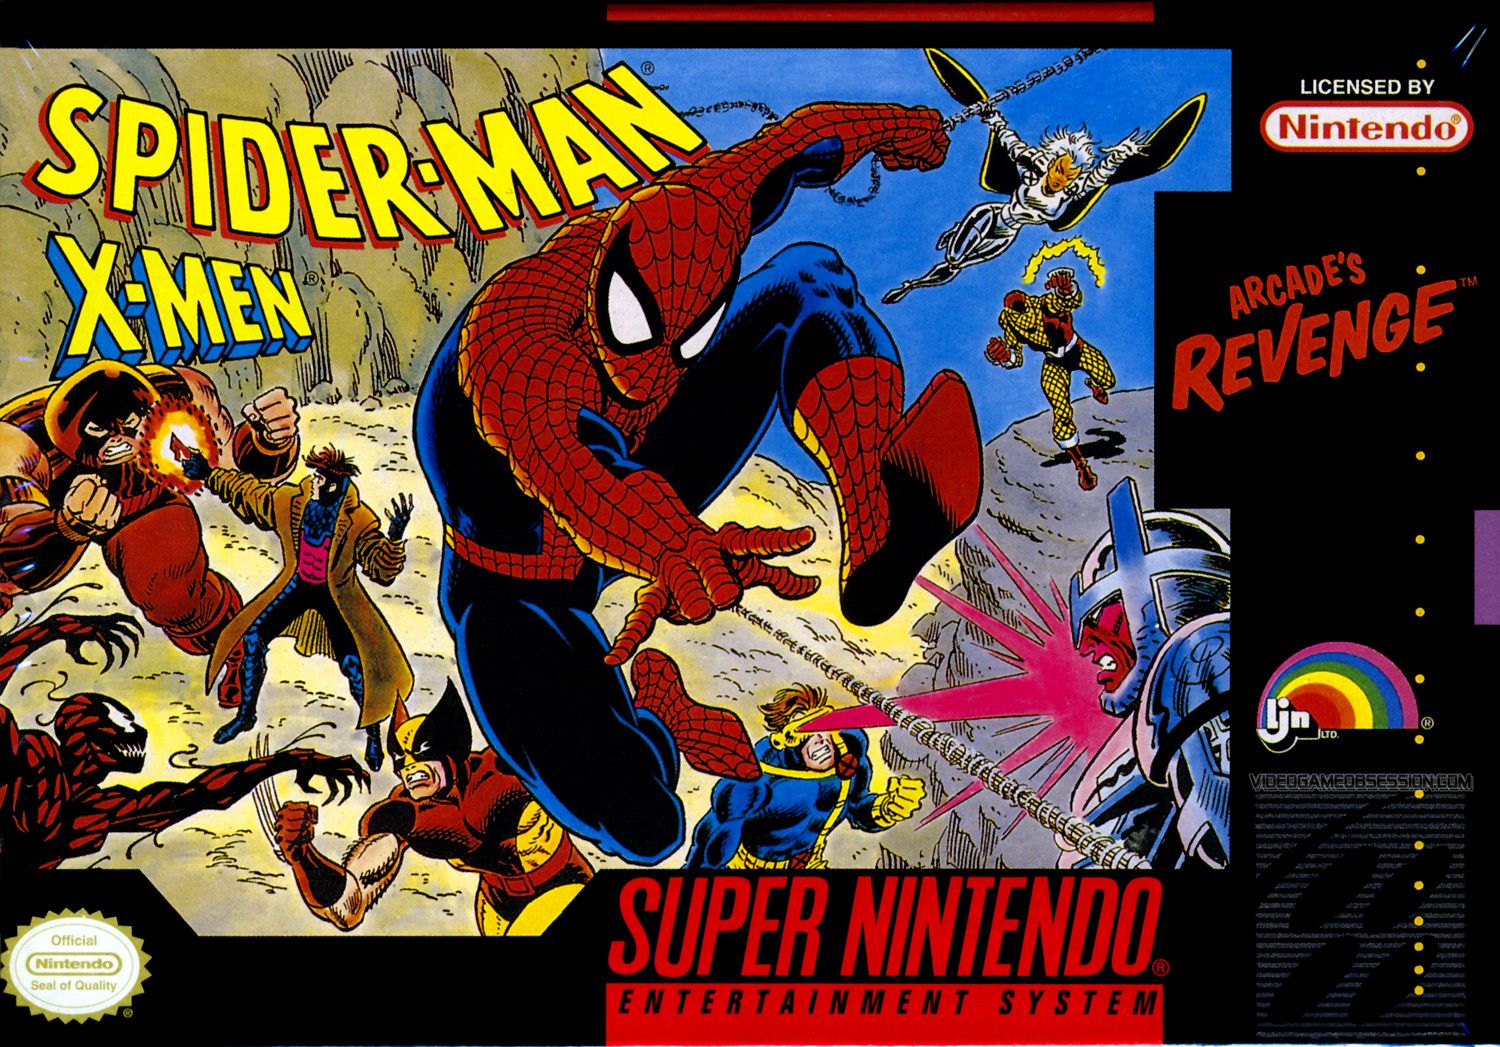 Spiderman X Men Arcade Revenge